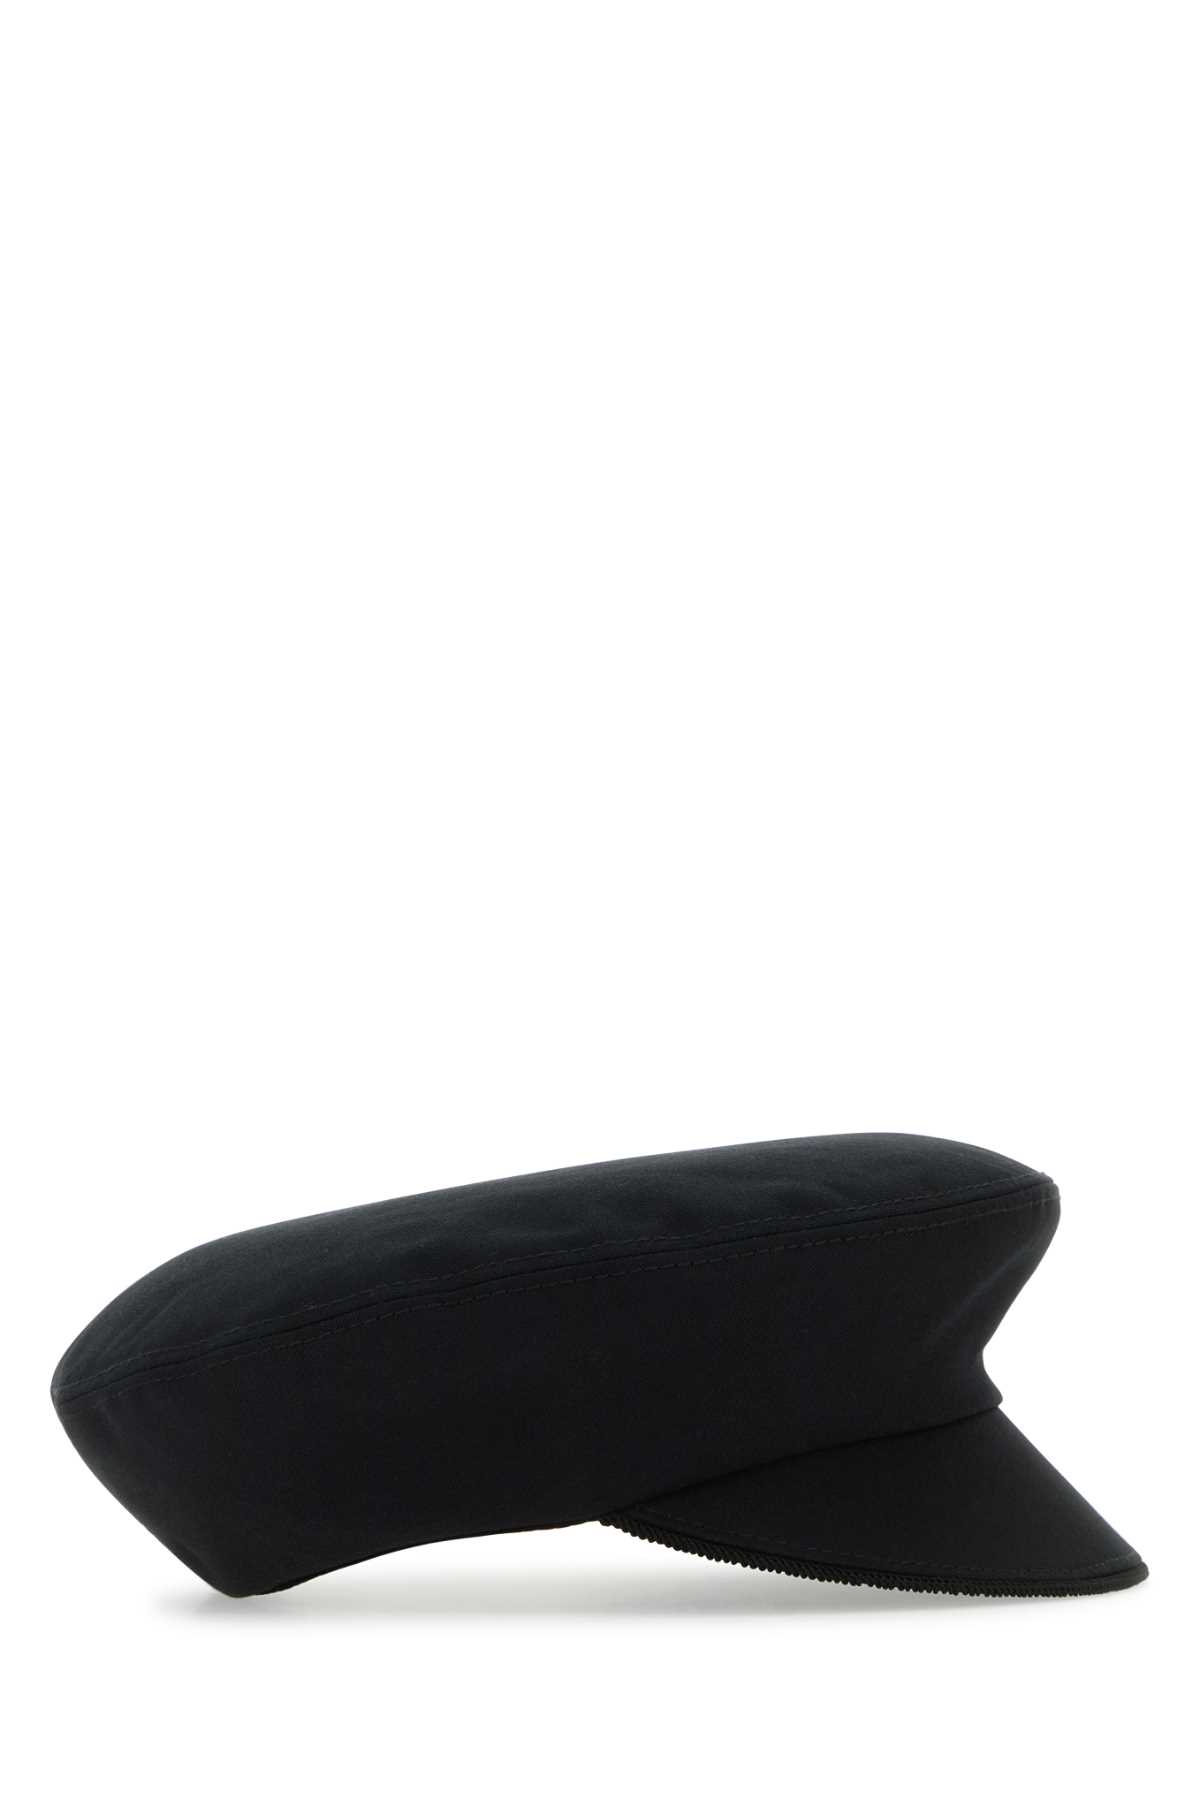 Shop Helen Kaminski Black Cotton Dali Hat